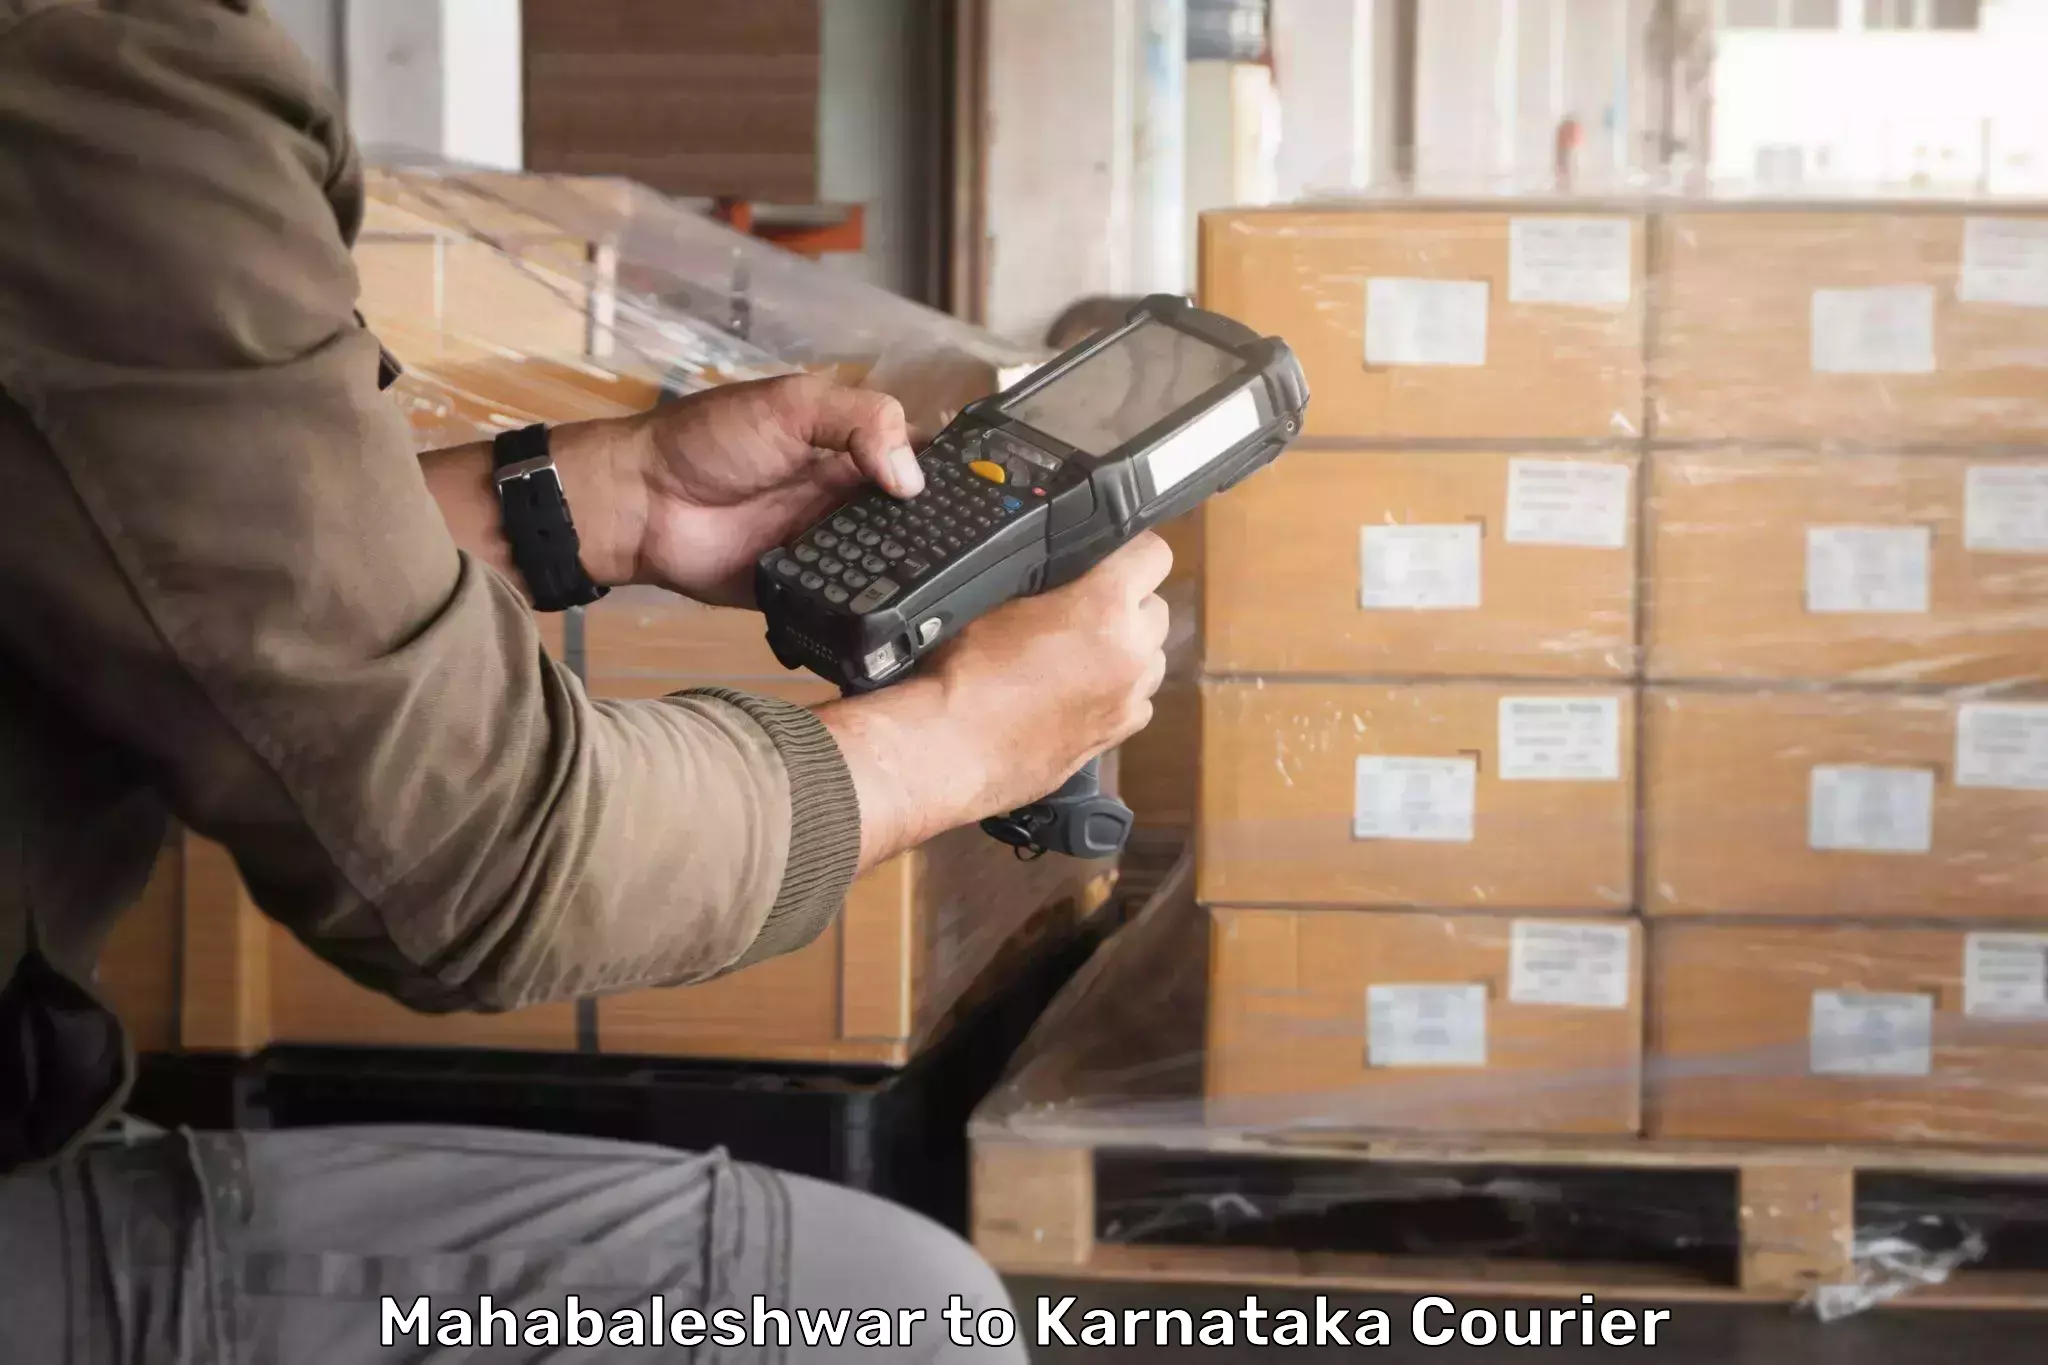 Cash on delivery service Mahabaleshwar to Karnataka